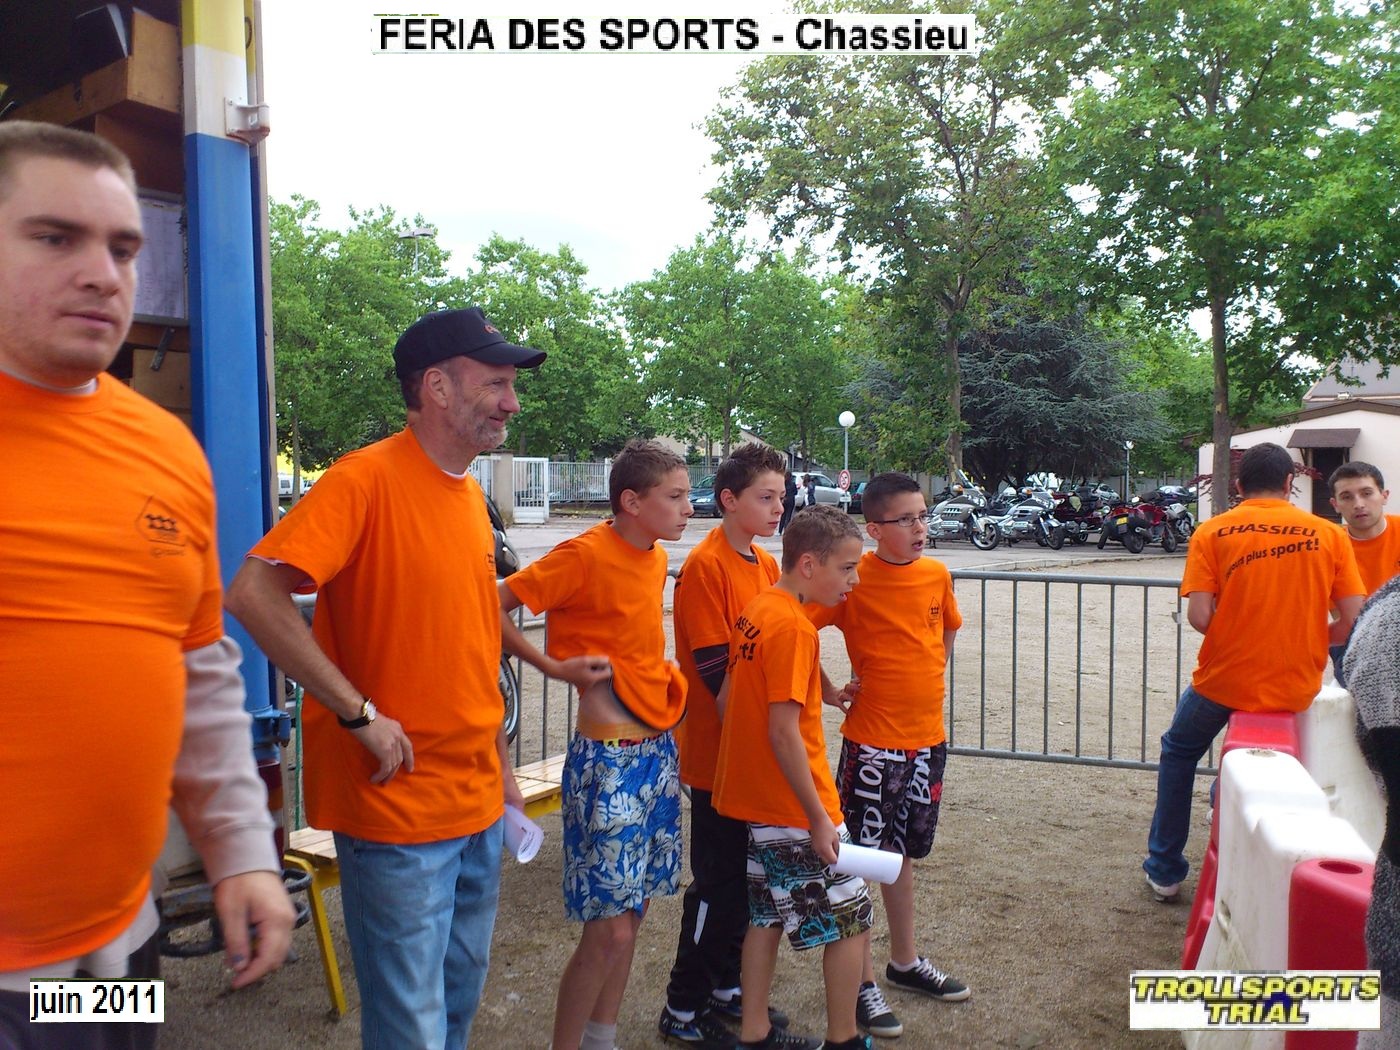 feria-sports/img/2011 06 feria sport chassieu 51.jpg